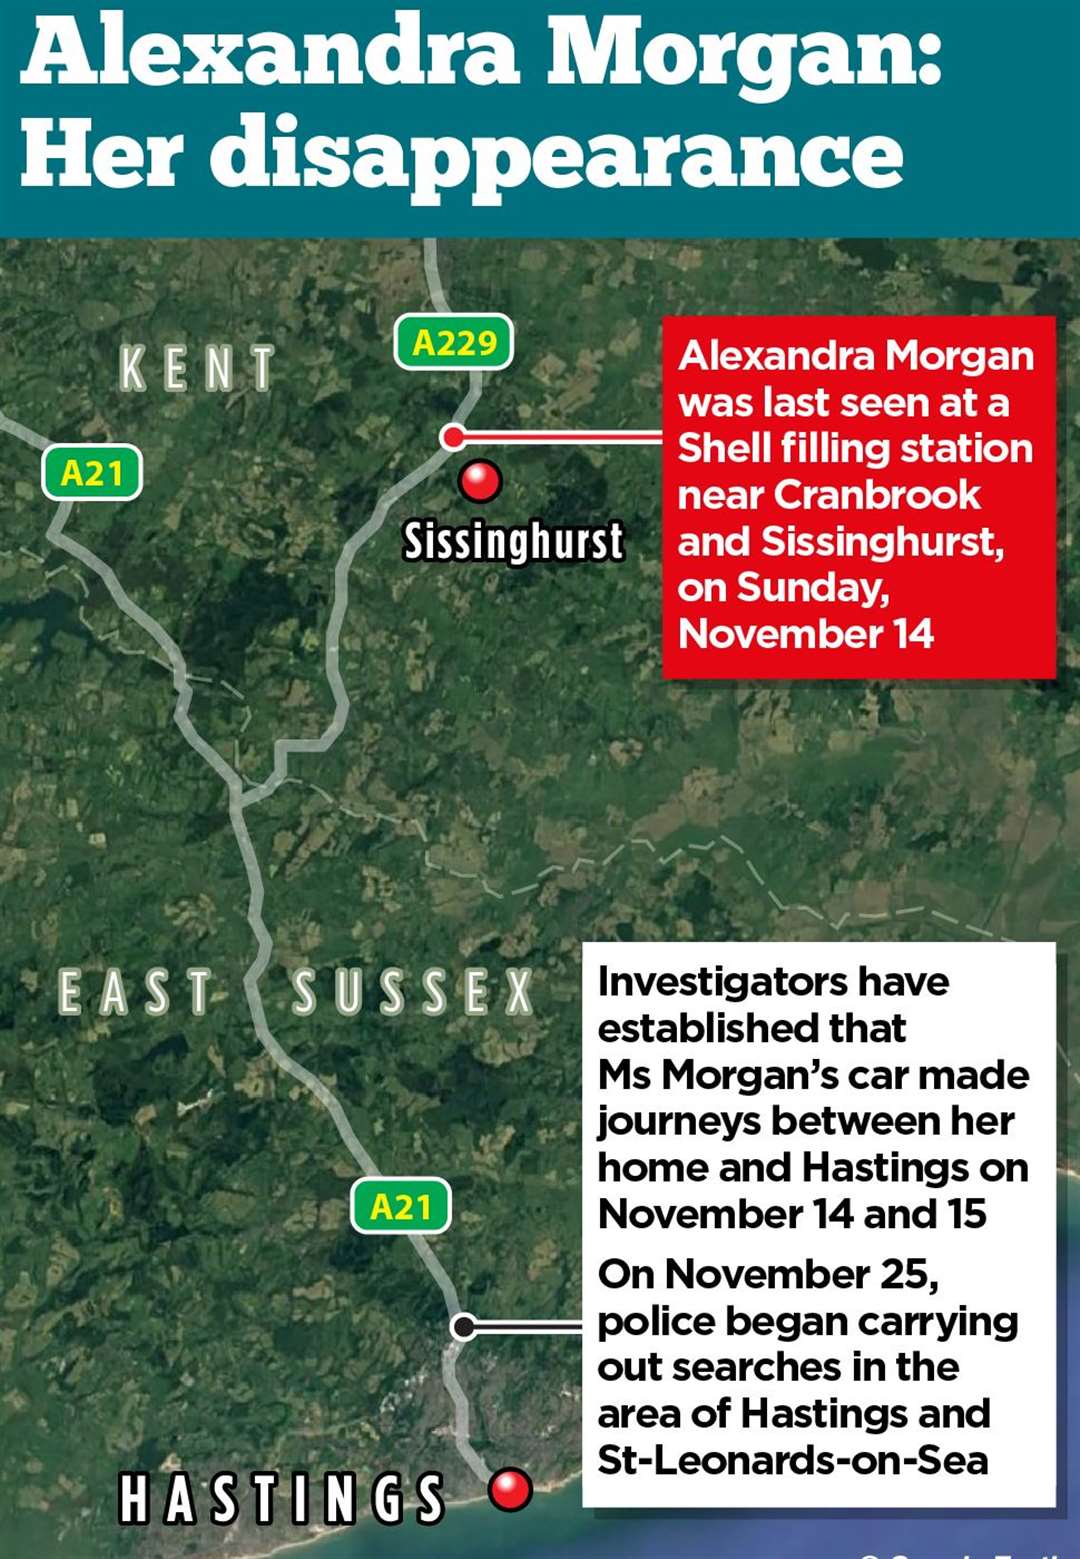 Alexandra Morgan has been missing since Sunday, November 14